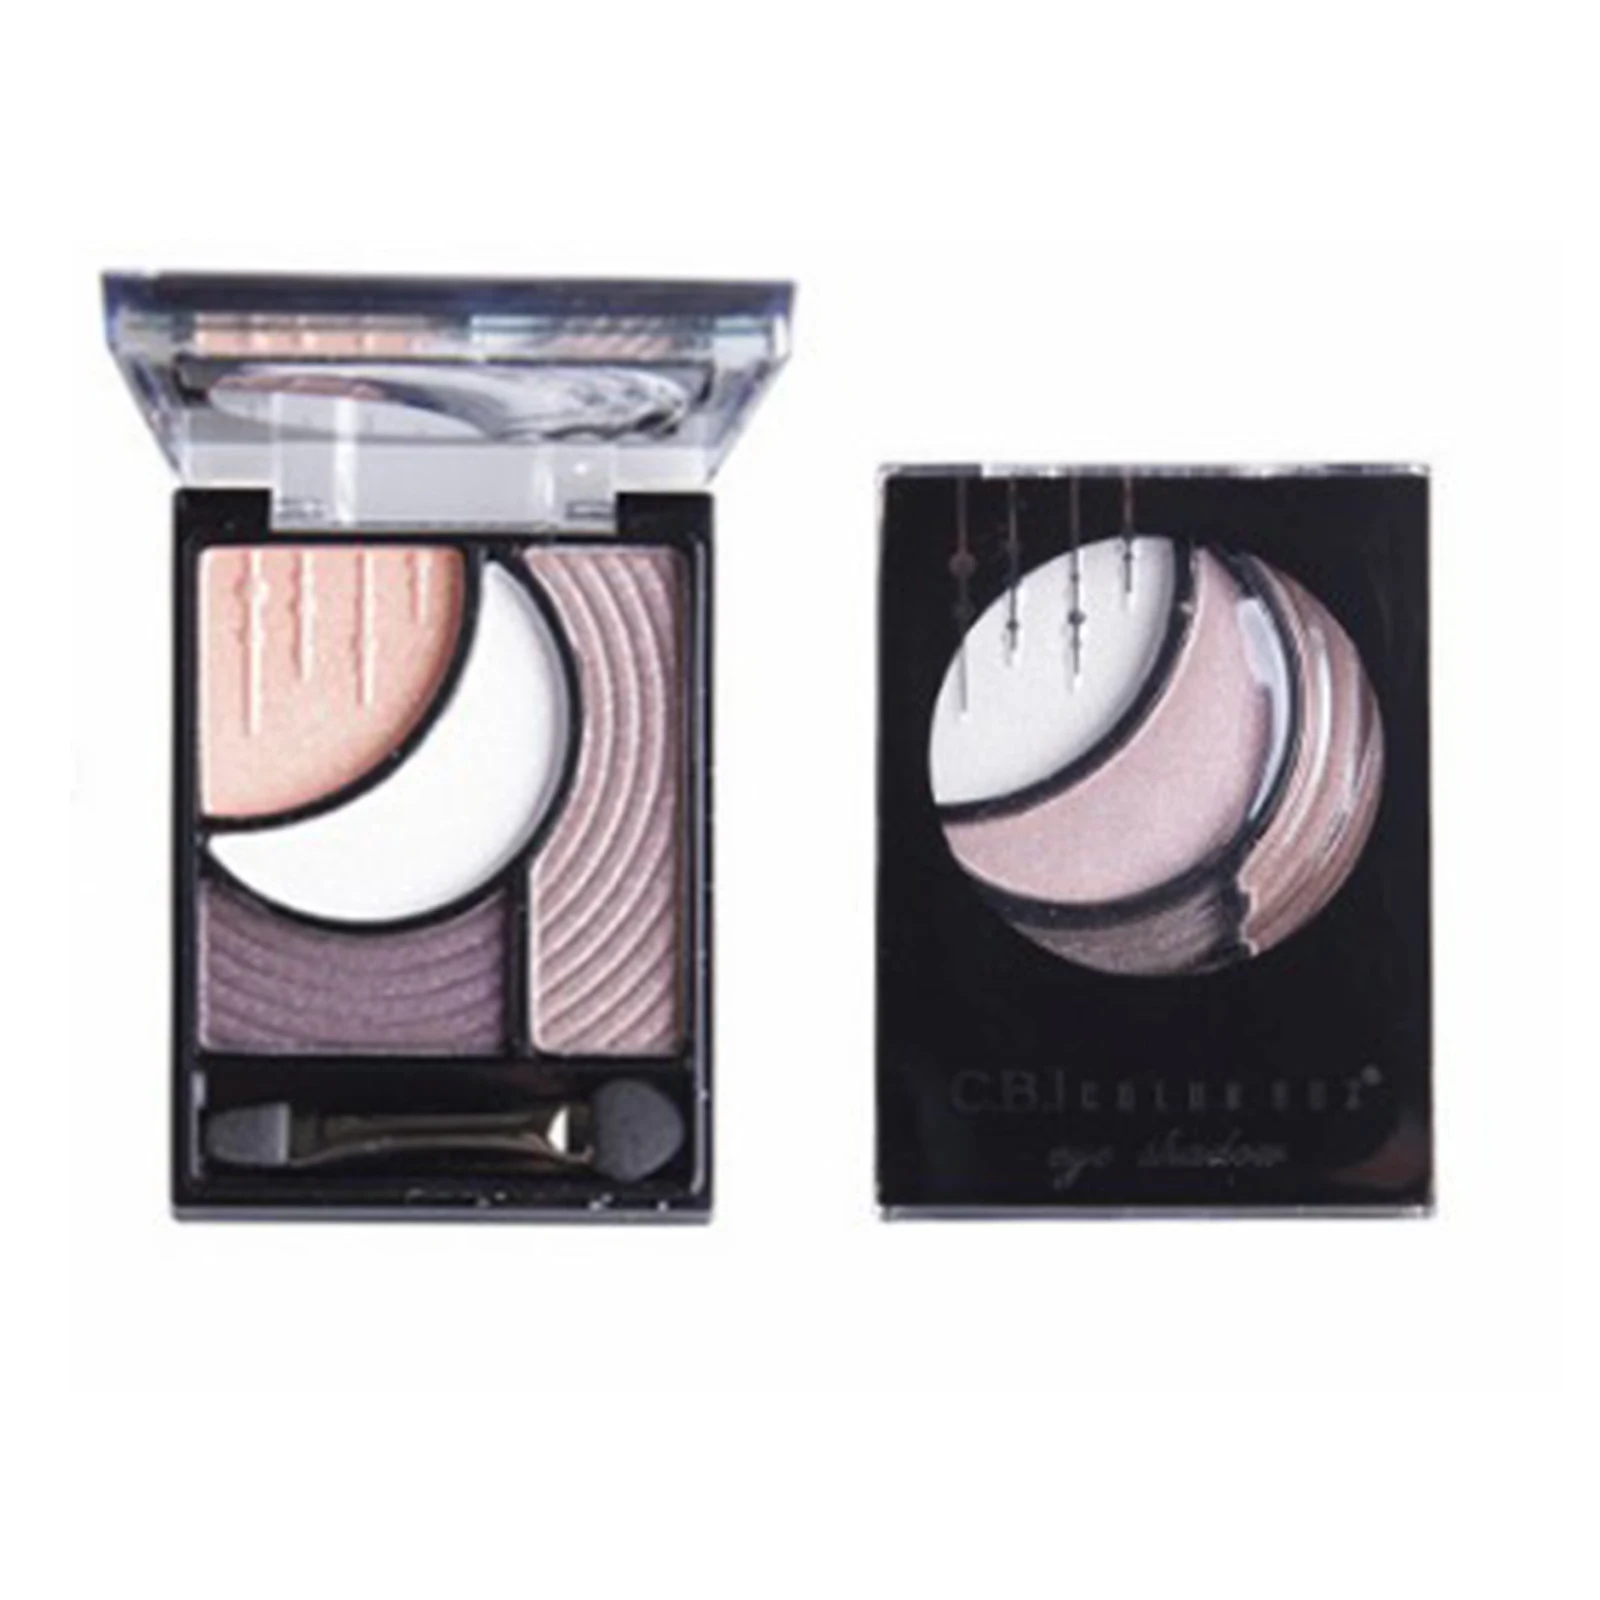 

COLOR BOX brand cosmetics eye makeup long lasting 4 color eye shadow with brush inside eyeshadow palette